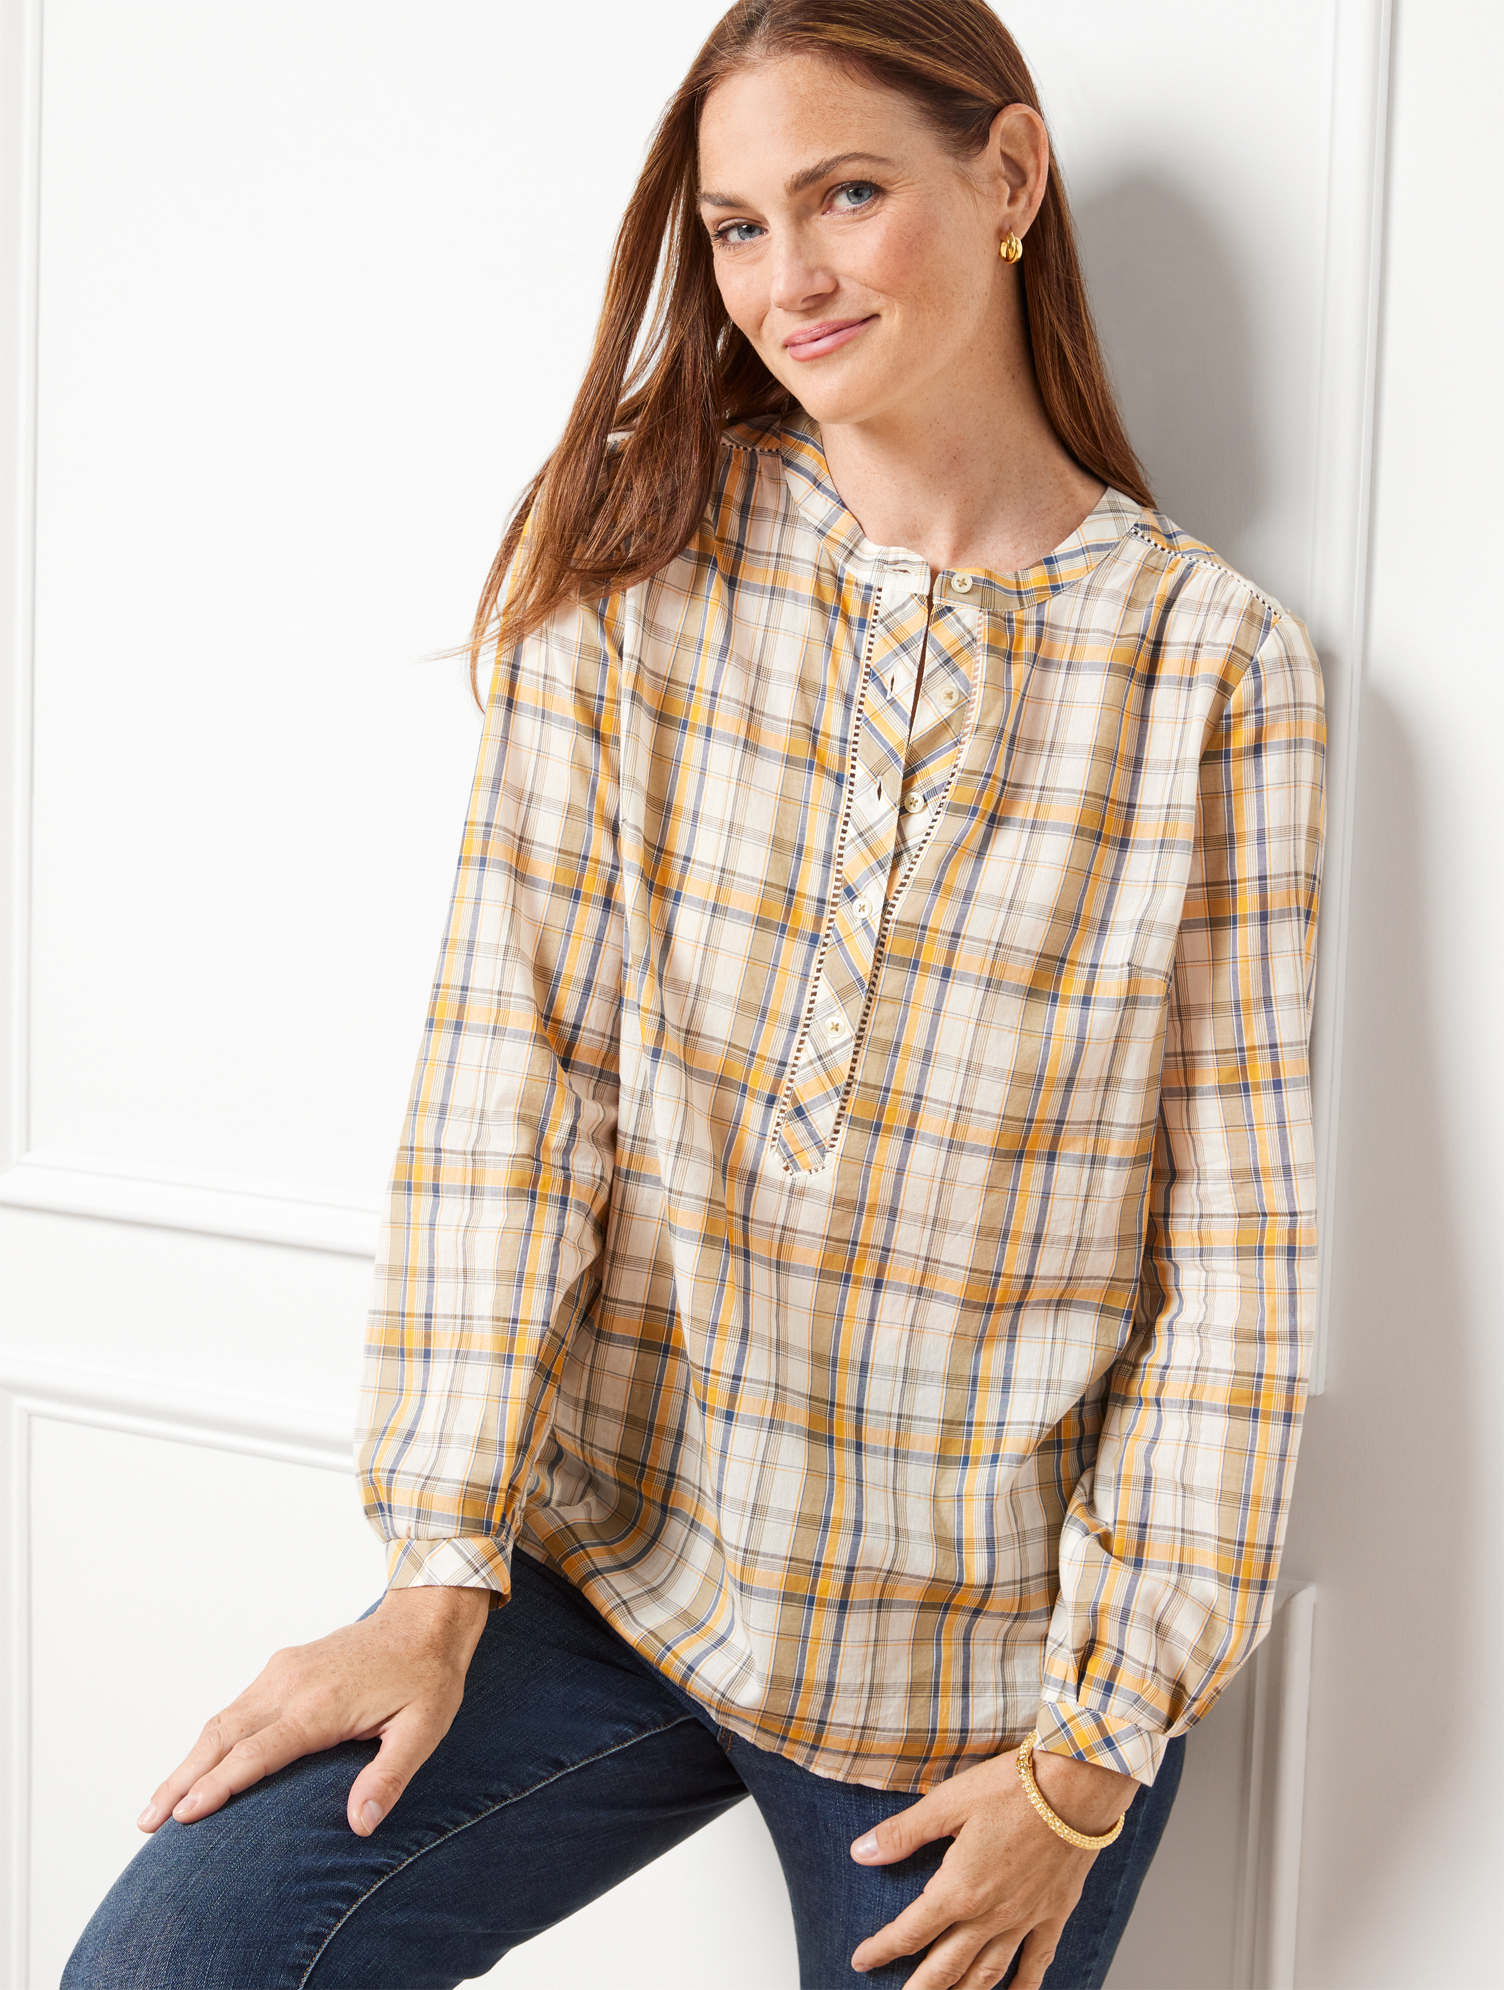 Talbots Plus Size - Band Collar Popover Shirt - Sunny Plaid - Sage Leaf - 2x - 100% Cotton